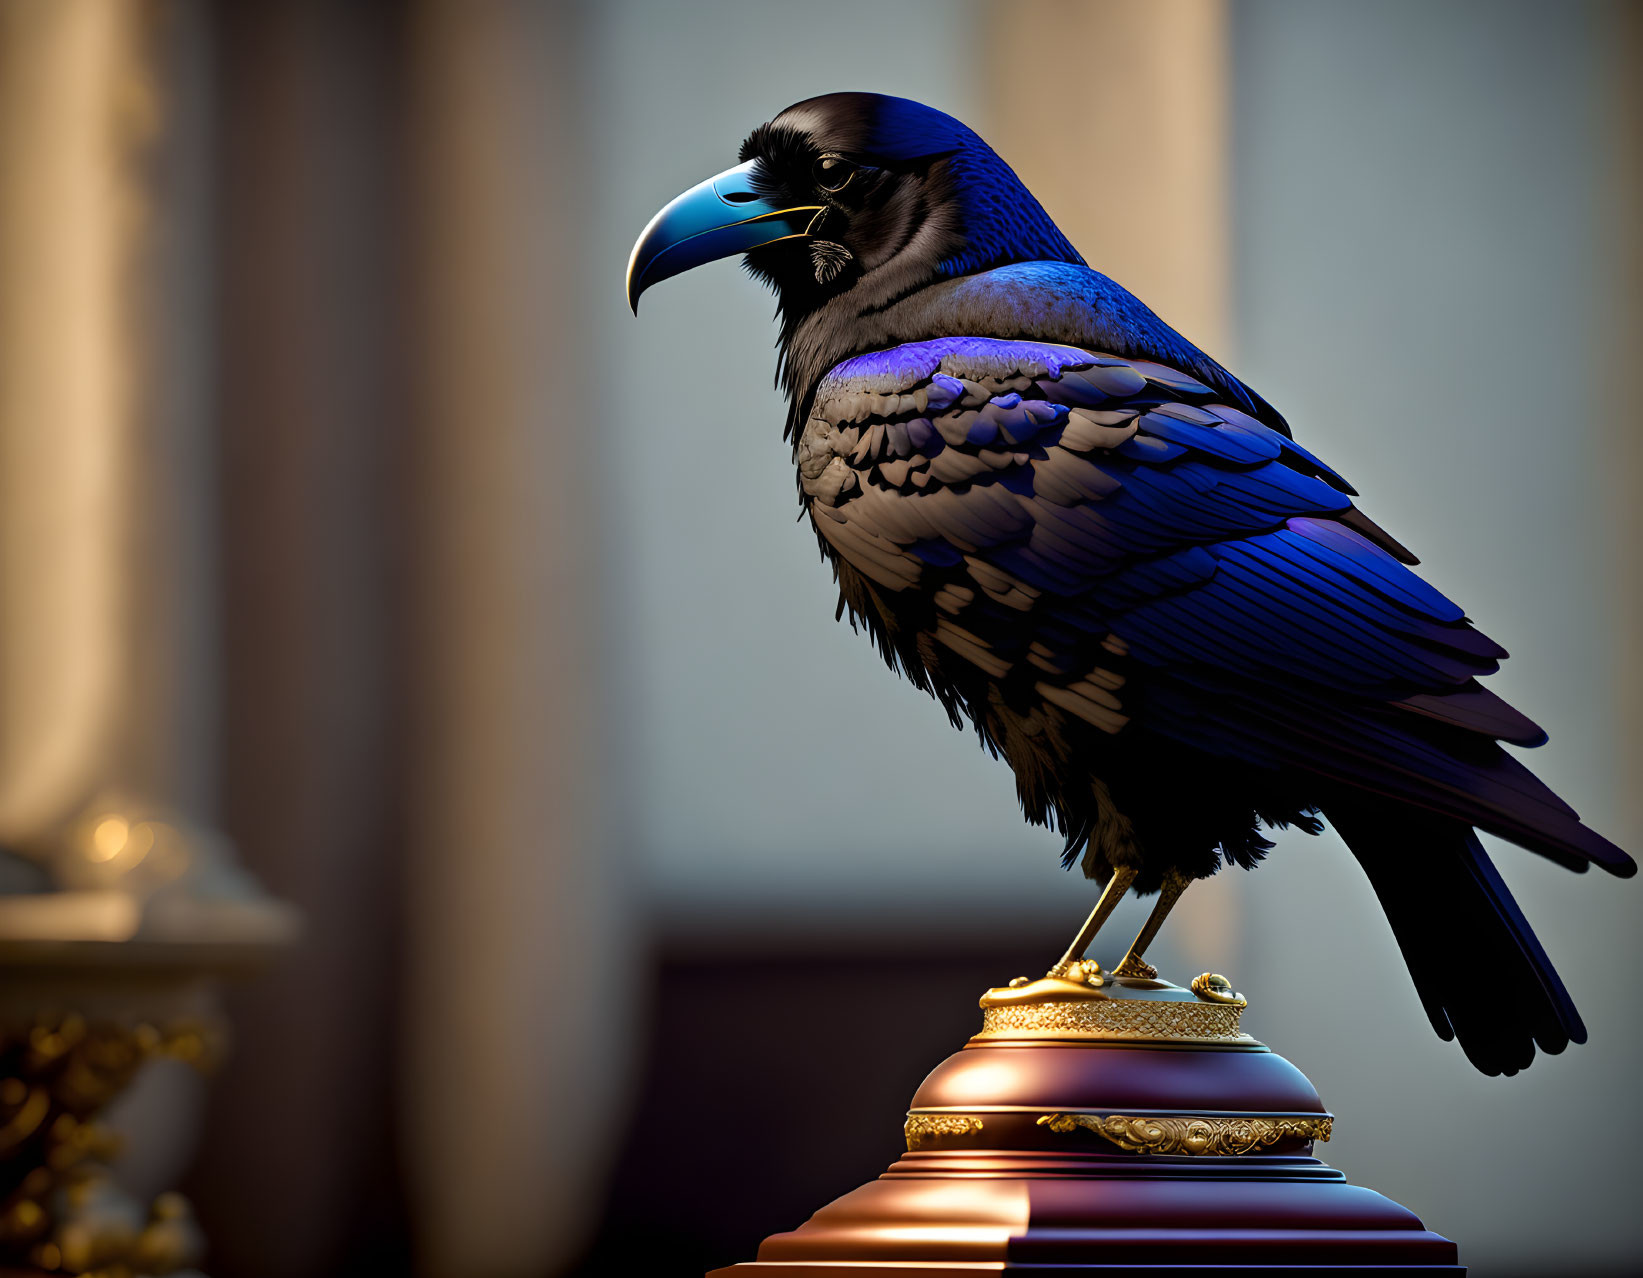 Majestic raven on golden pedestal with soft lighting